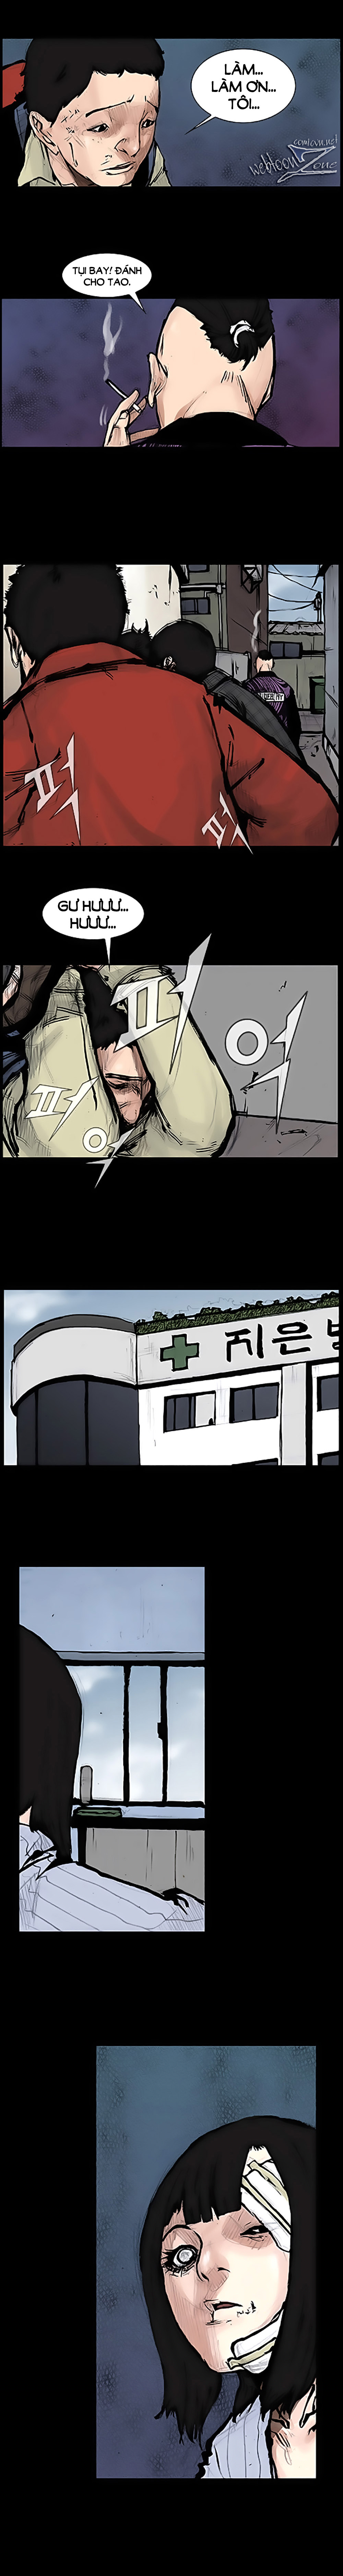 Dokgo Rewind kỳ 6 trang 6